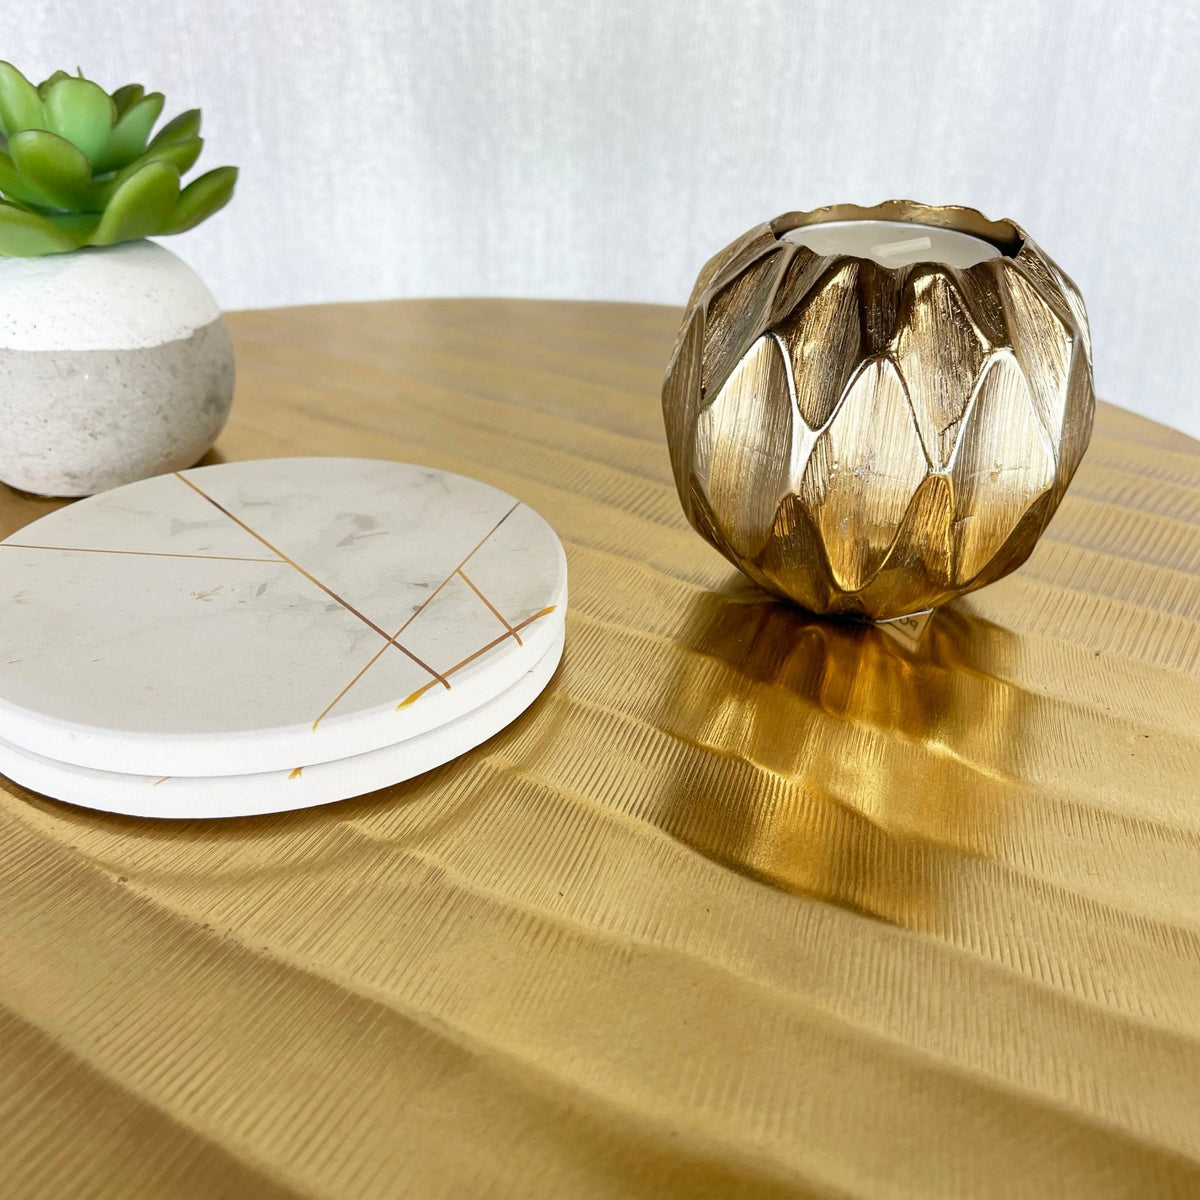 Motus Gold Side Table